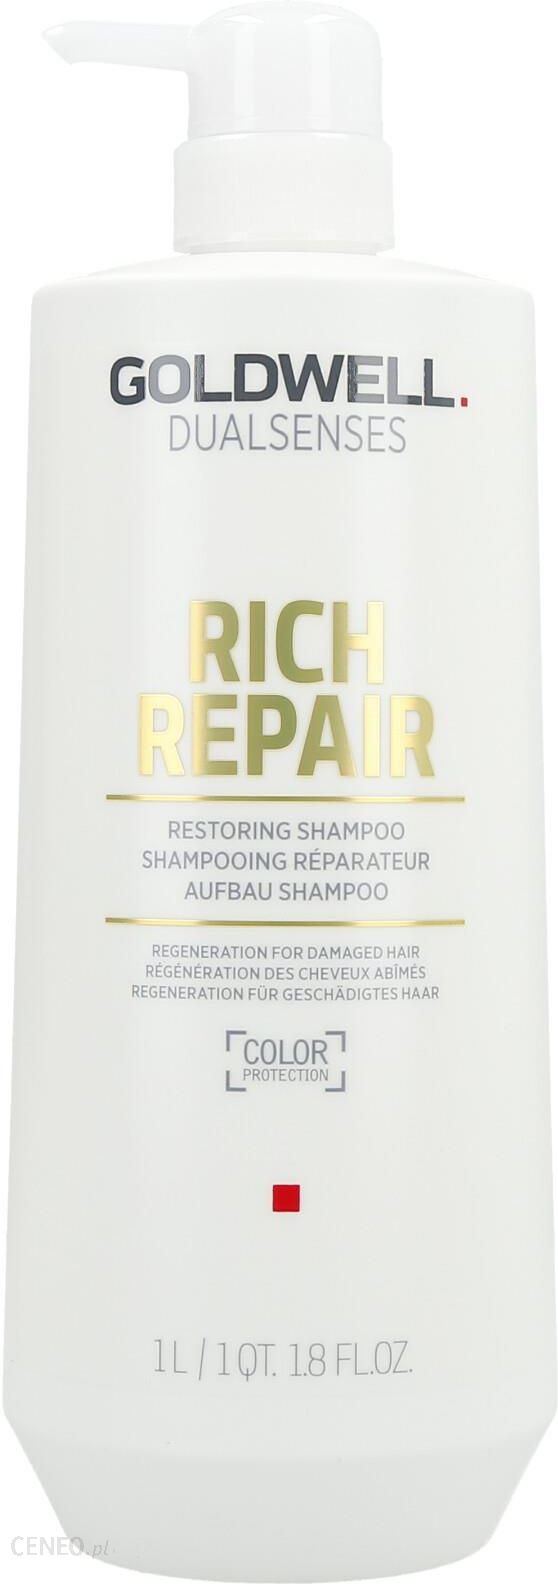 szampon rich repair z goldwell rossmann